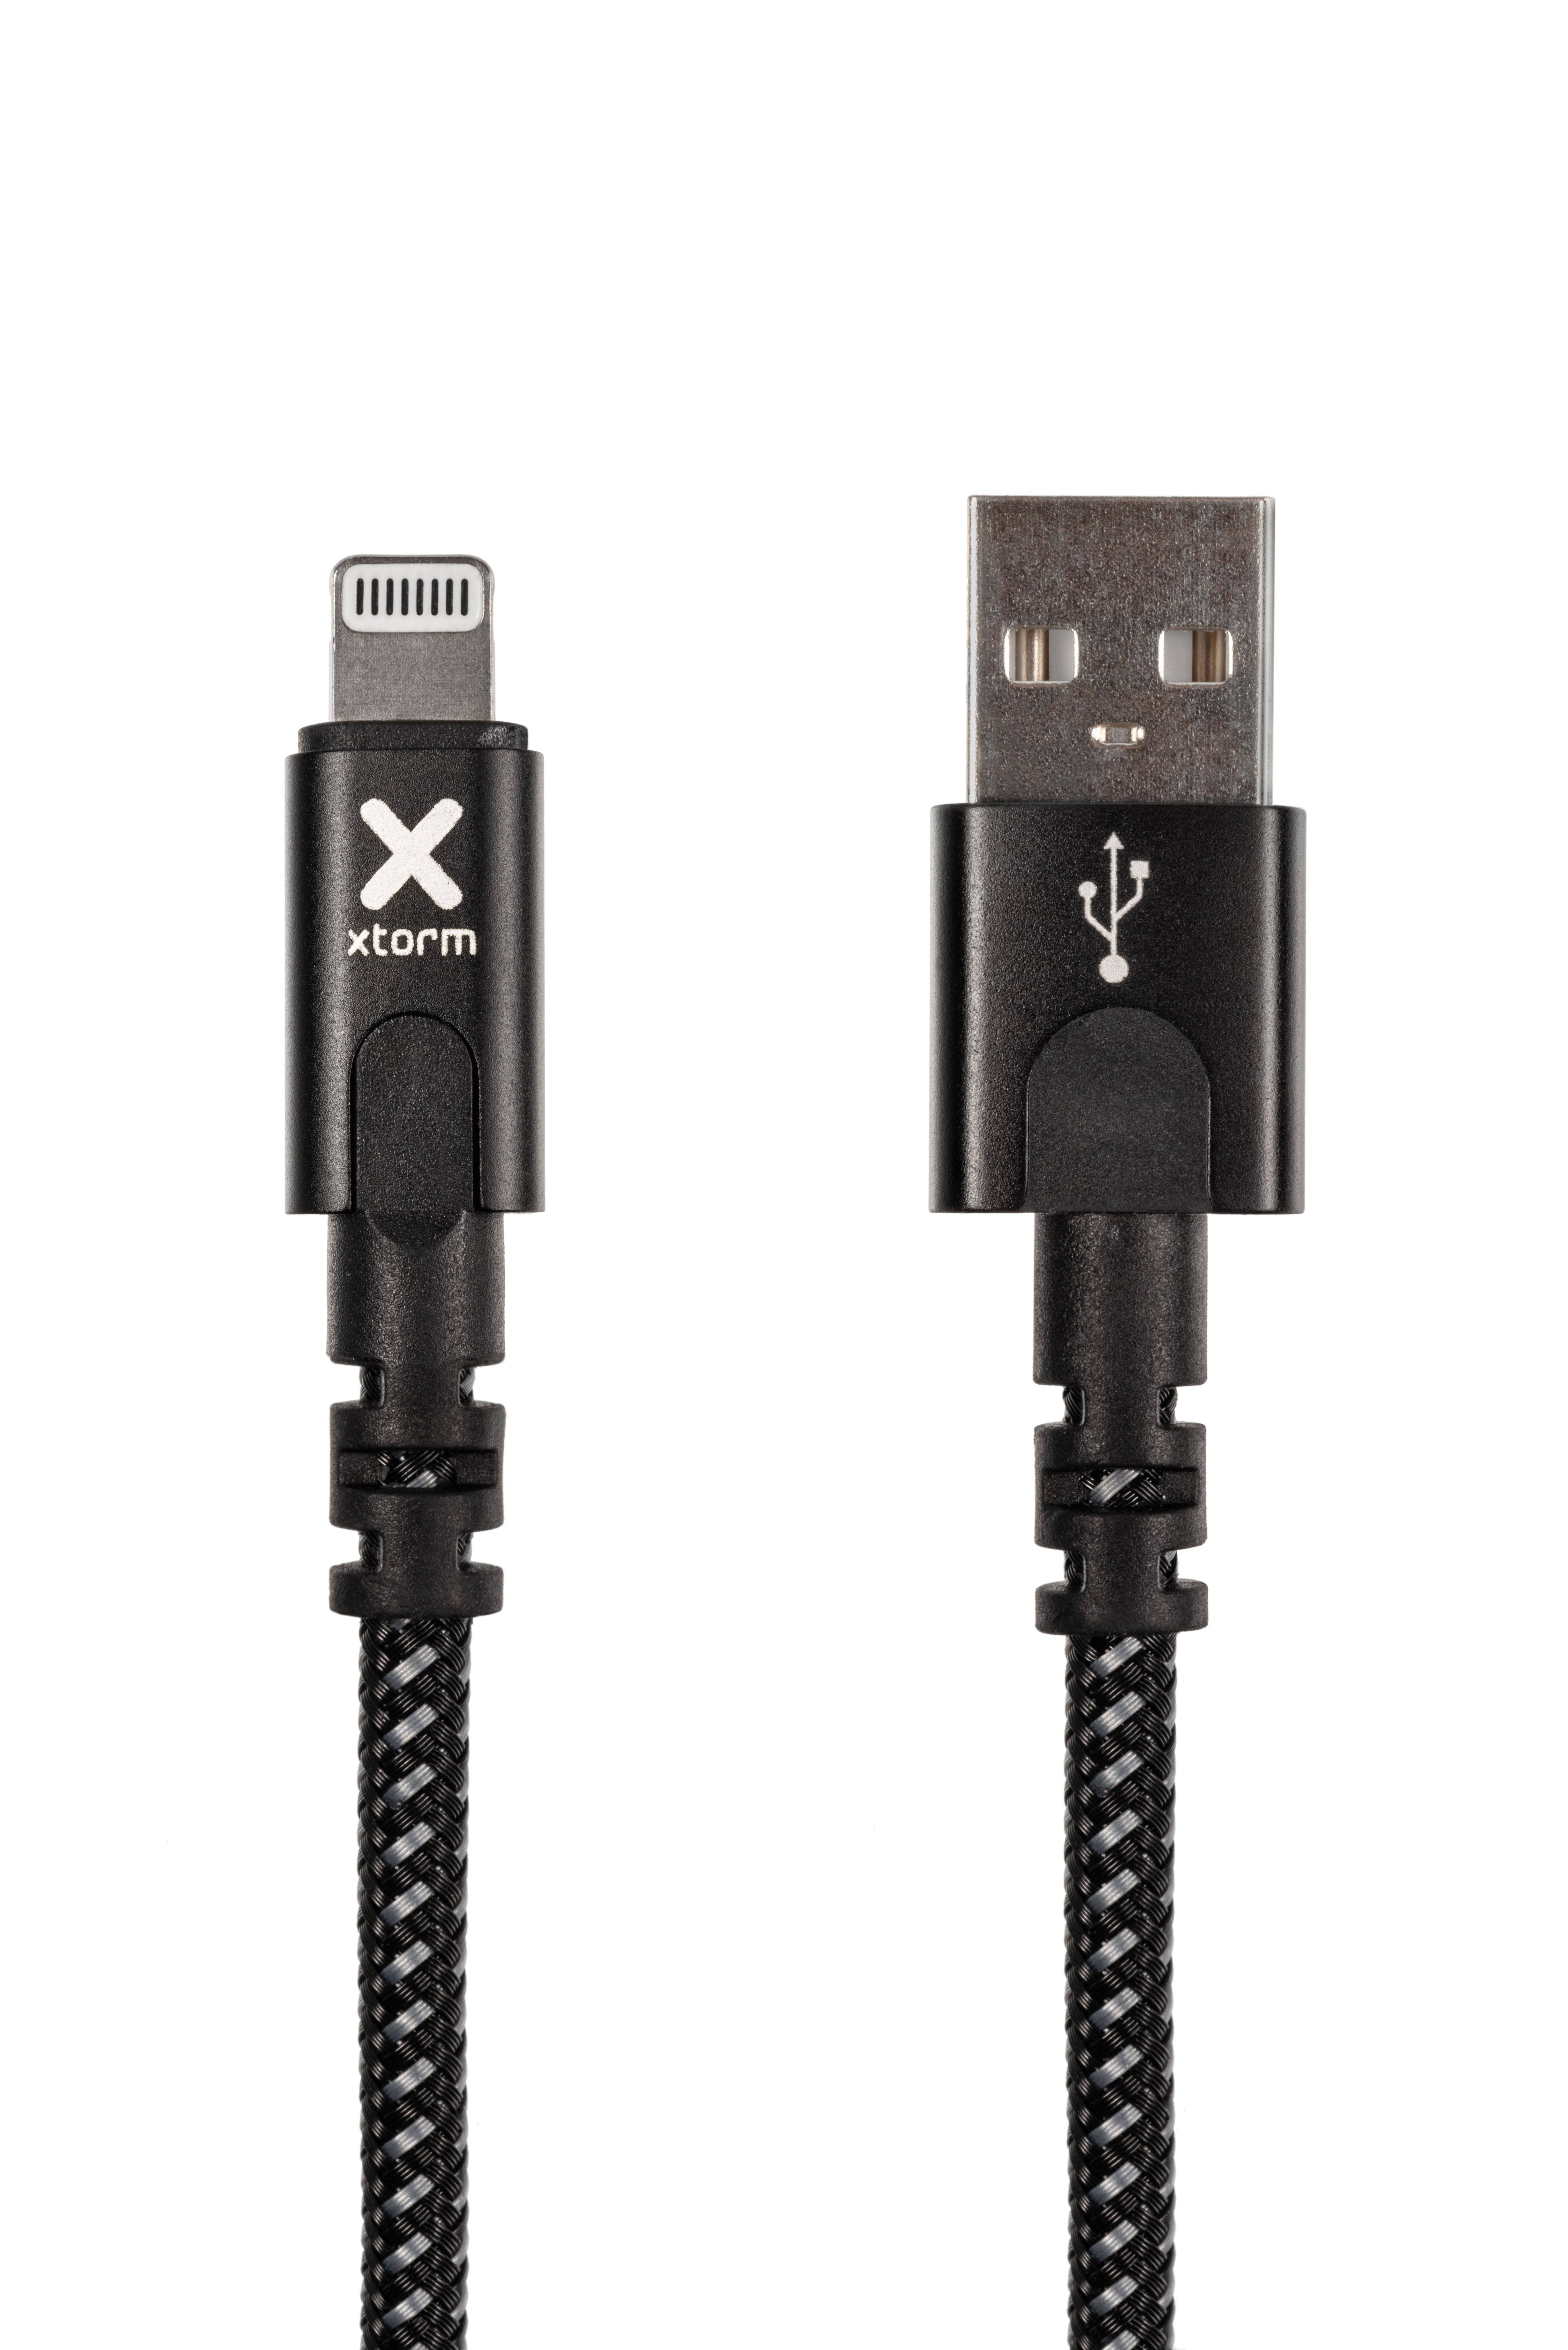 Rca Informatique - Image du produit : ORIGINAL USB TO LIGHTNING CABLE (3M) BLACK